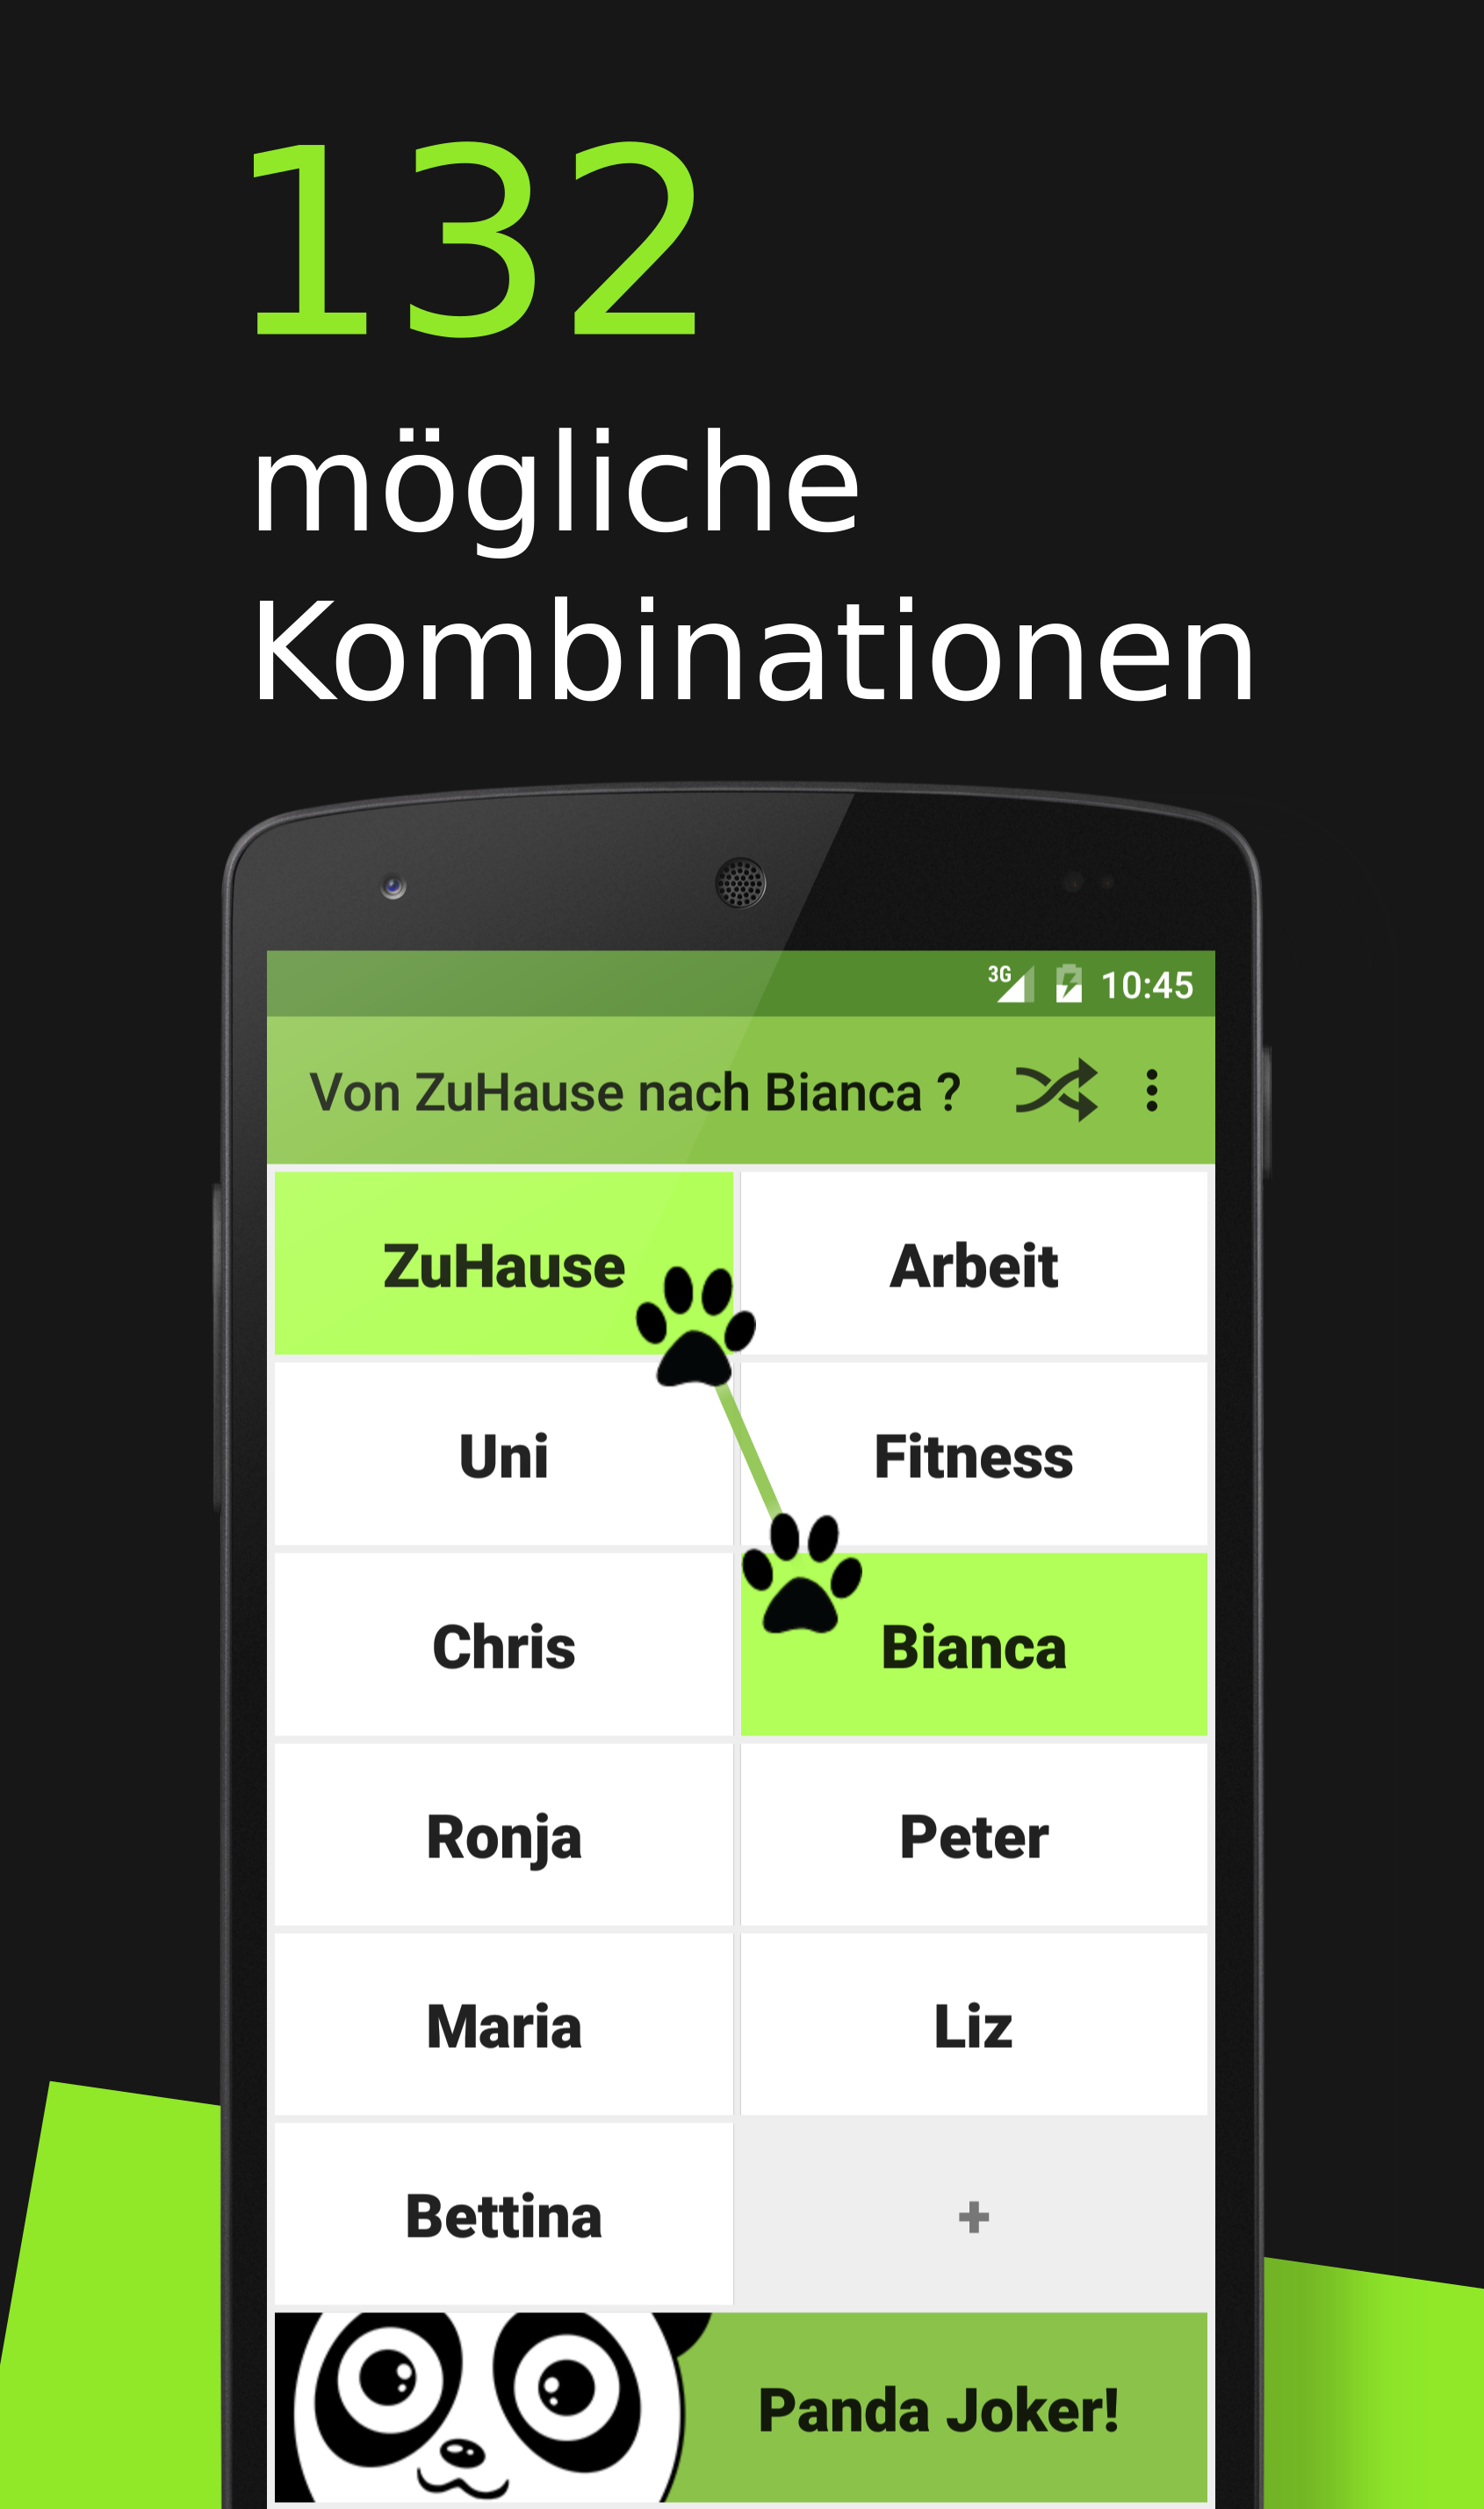 Android application Pendel Panda Timetable screenshort